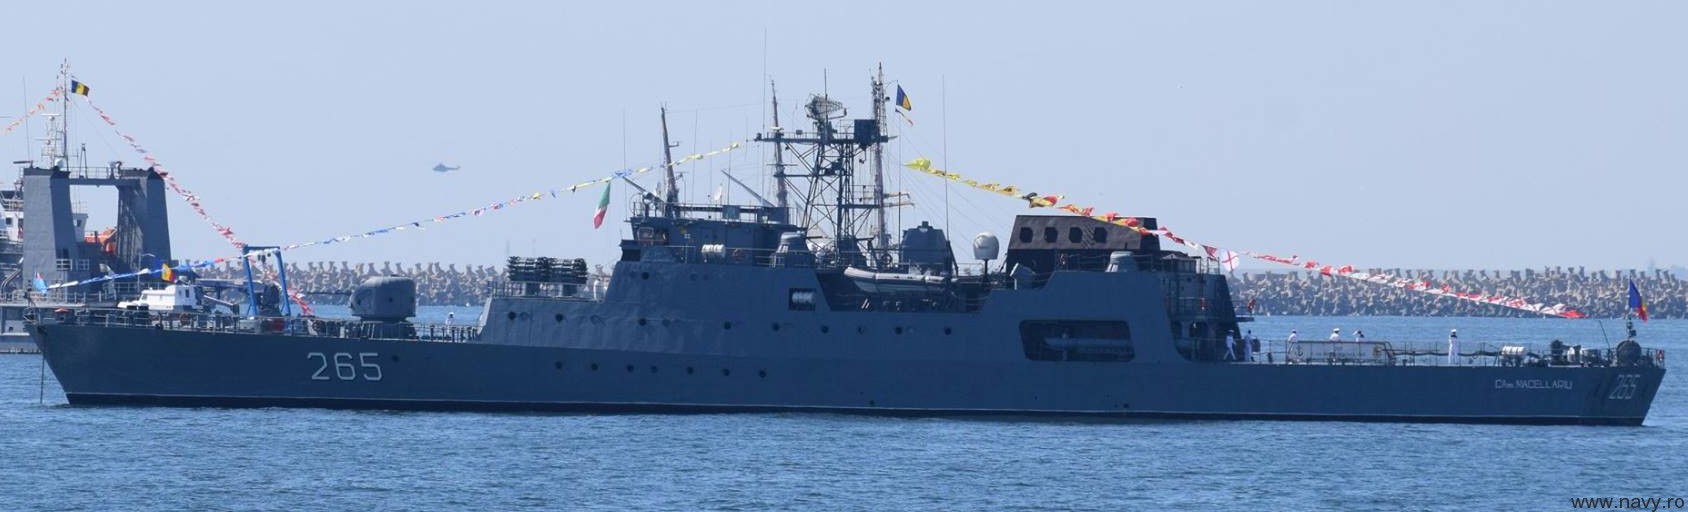 f-265 ros contraamiral horia macellariu tetal-ii class corvette romanian navy 14